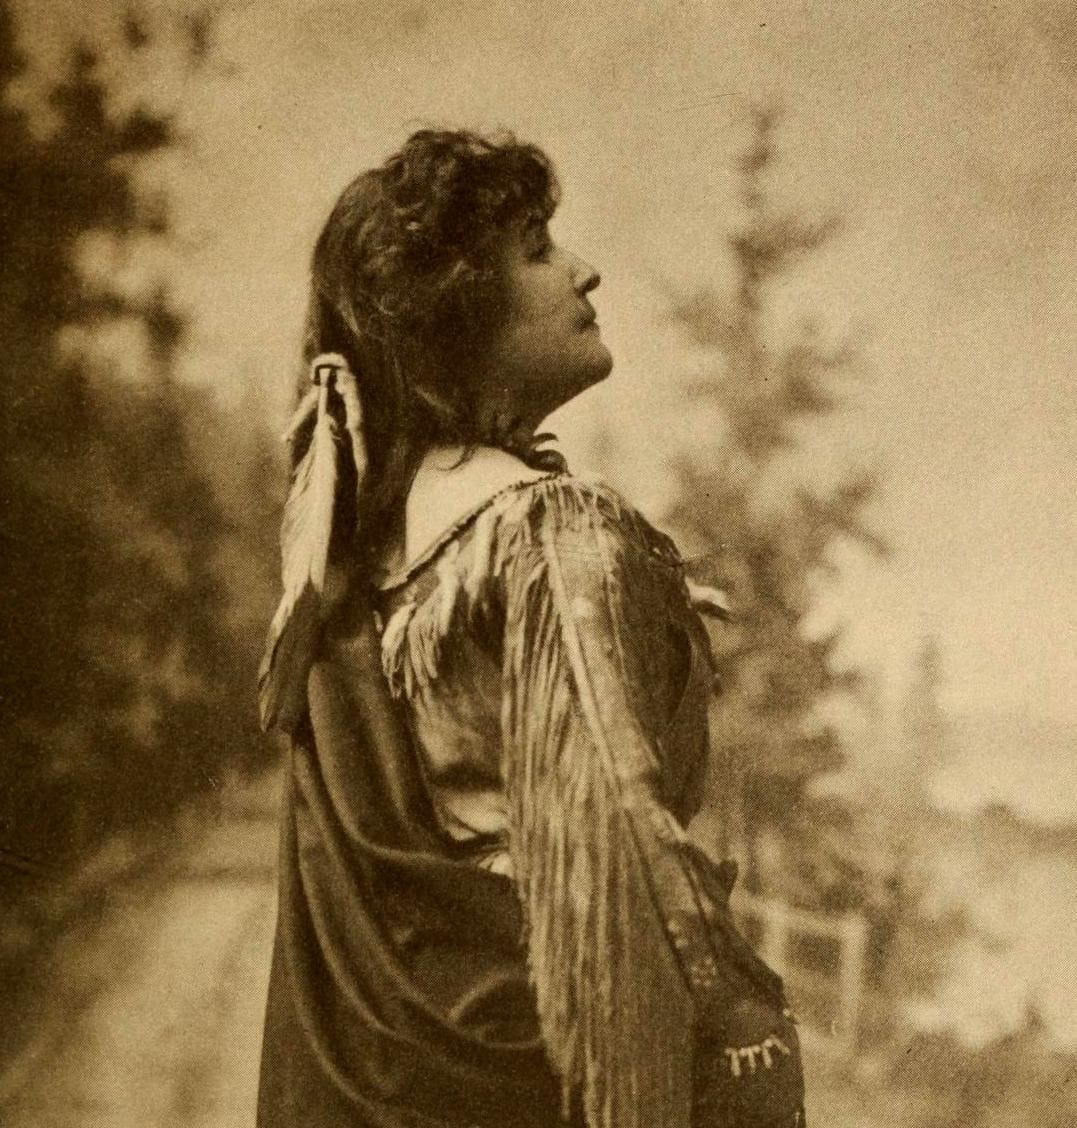 Women in history: Indigenous poet Emily Pauline Johnson